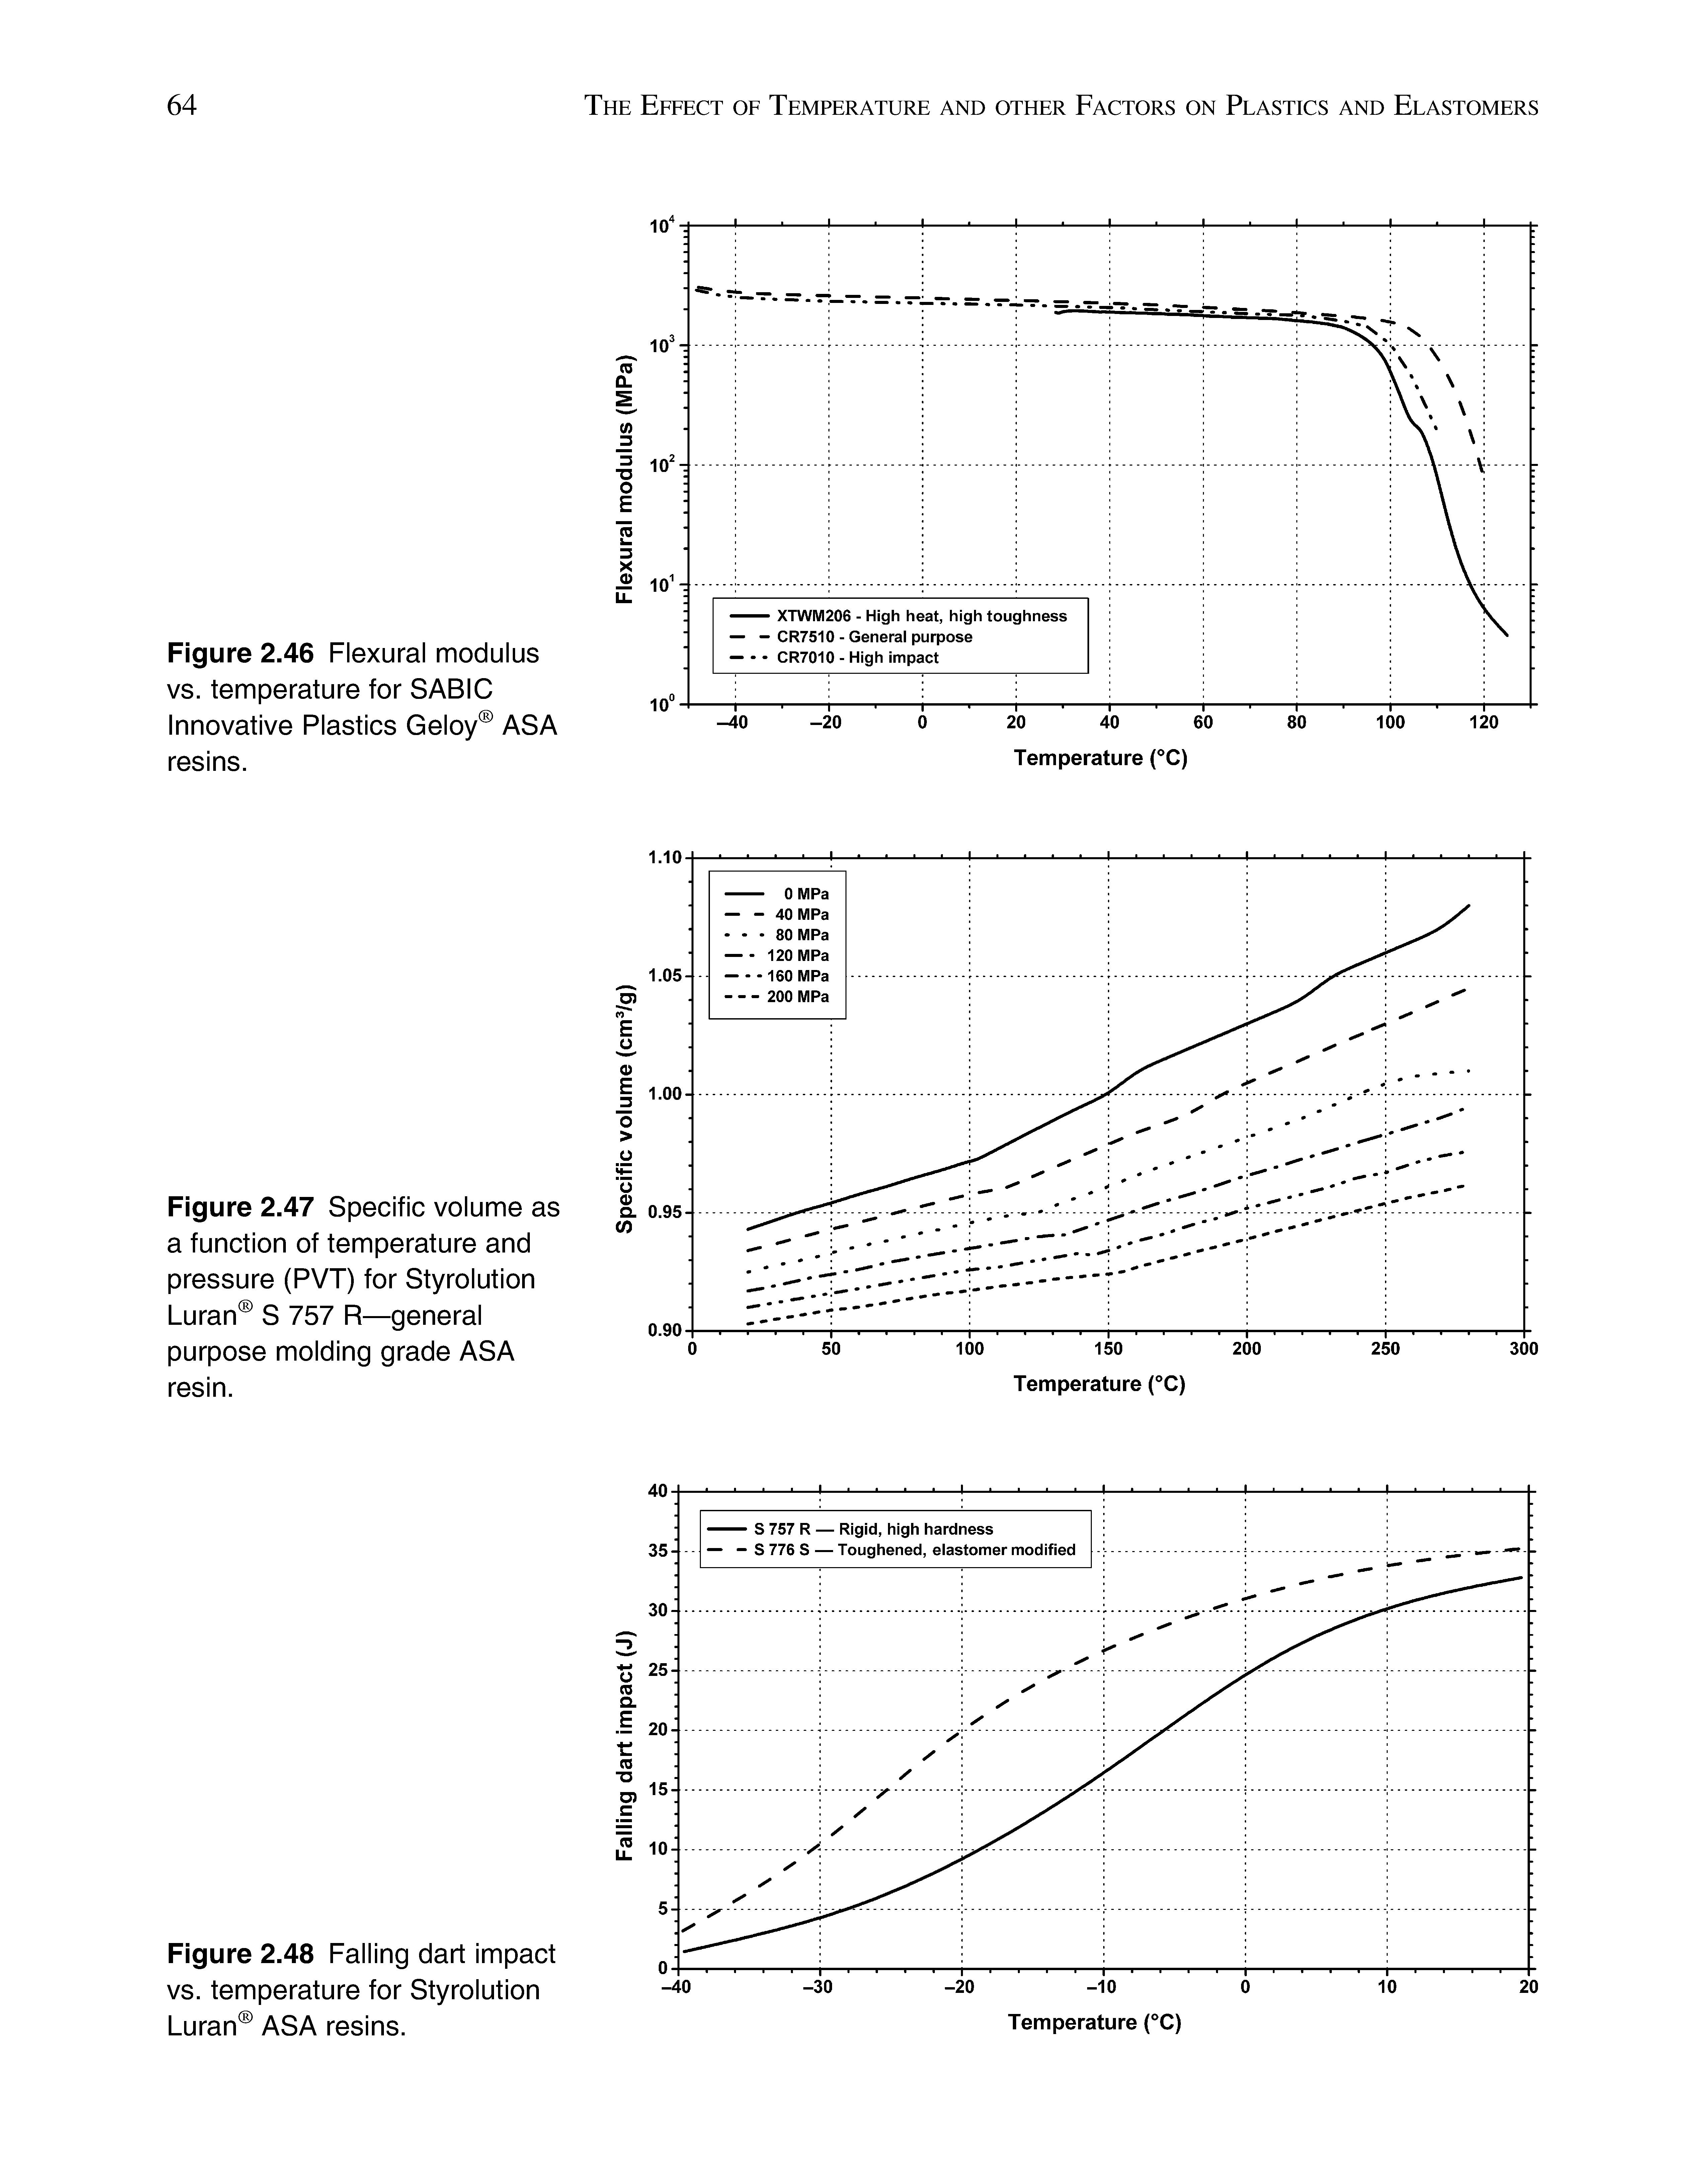 Figure 2.48 Falling dart impact vs. temperature for Styrolution Luran ASA resins.